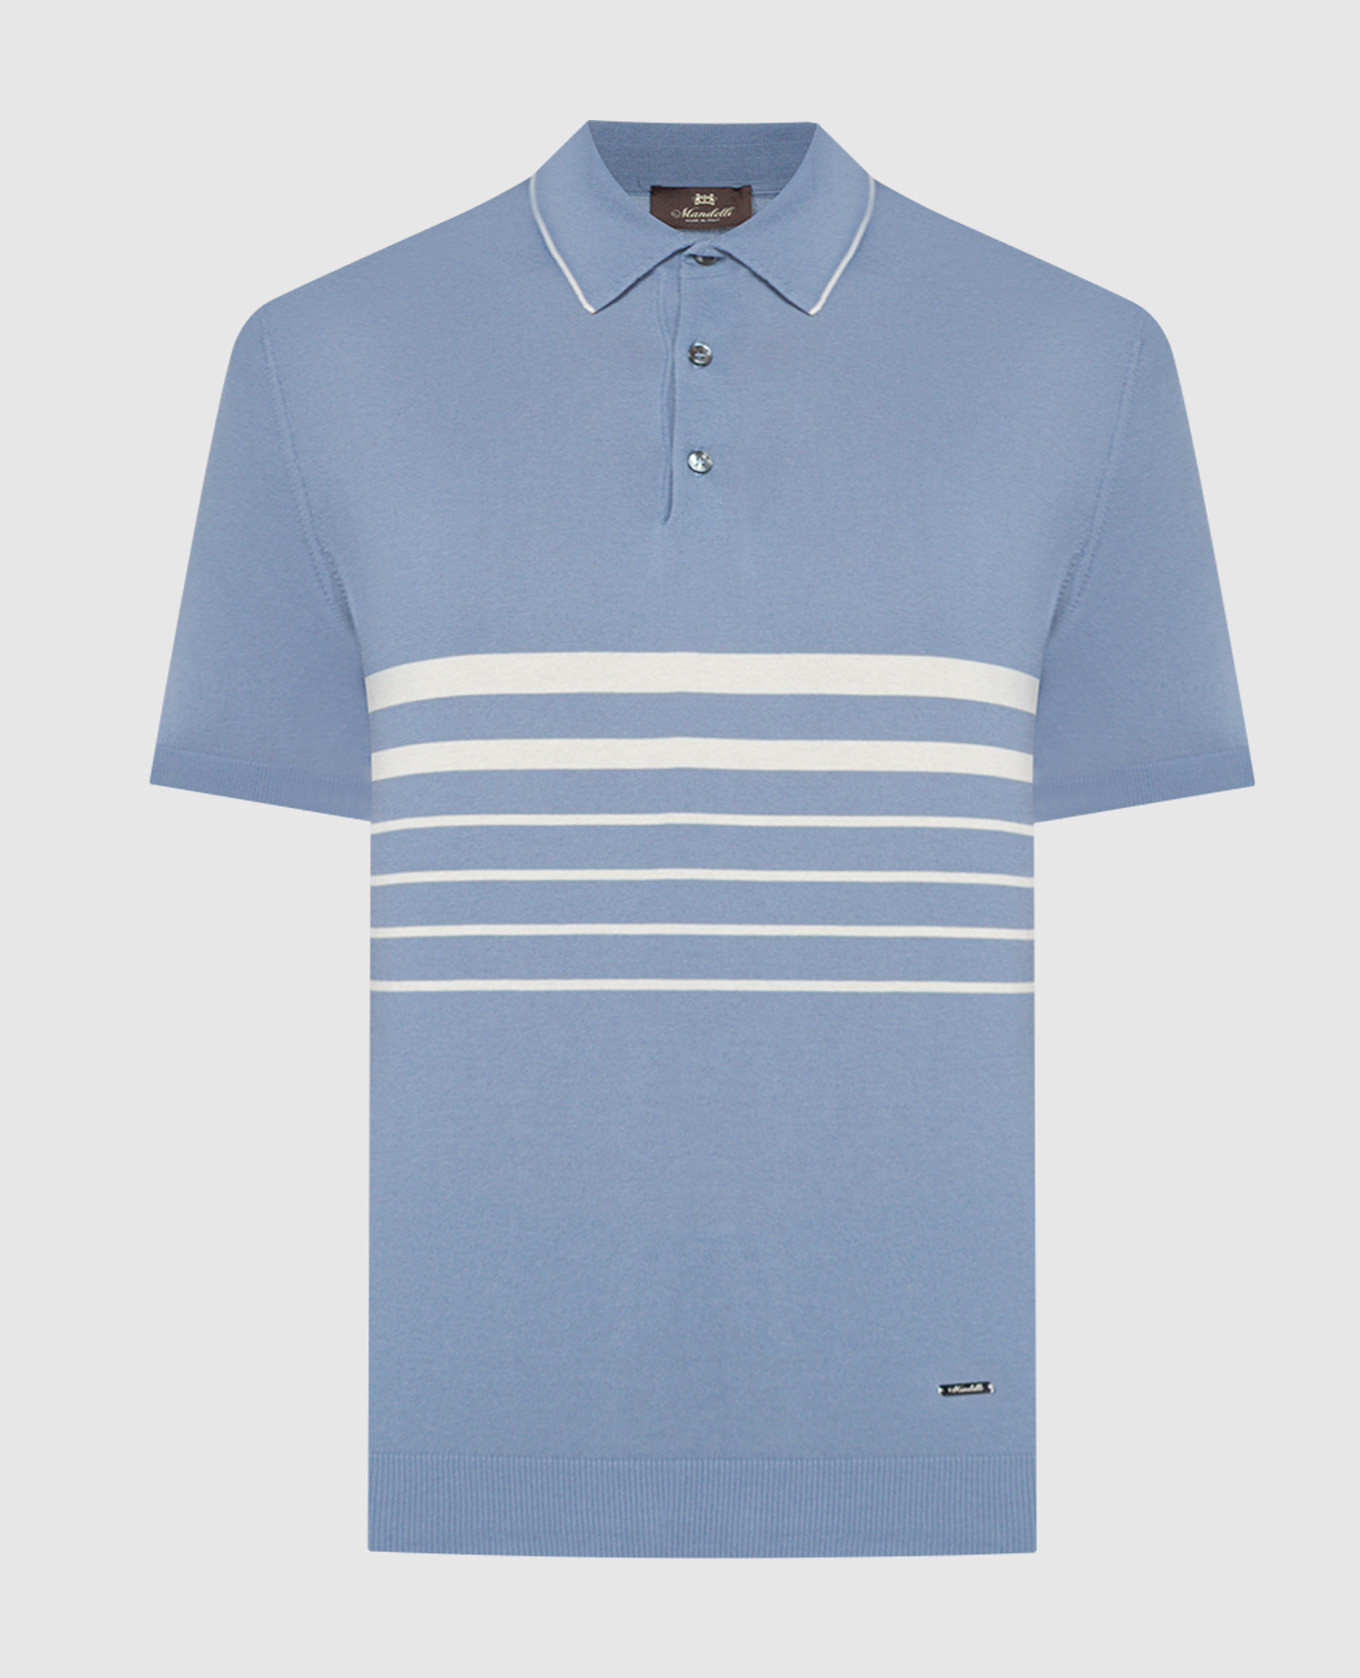 Blue striped polo shirt with logo